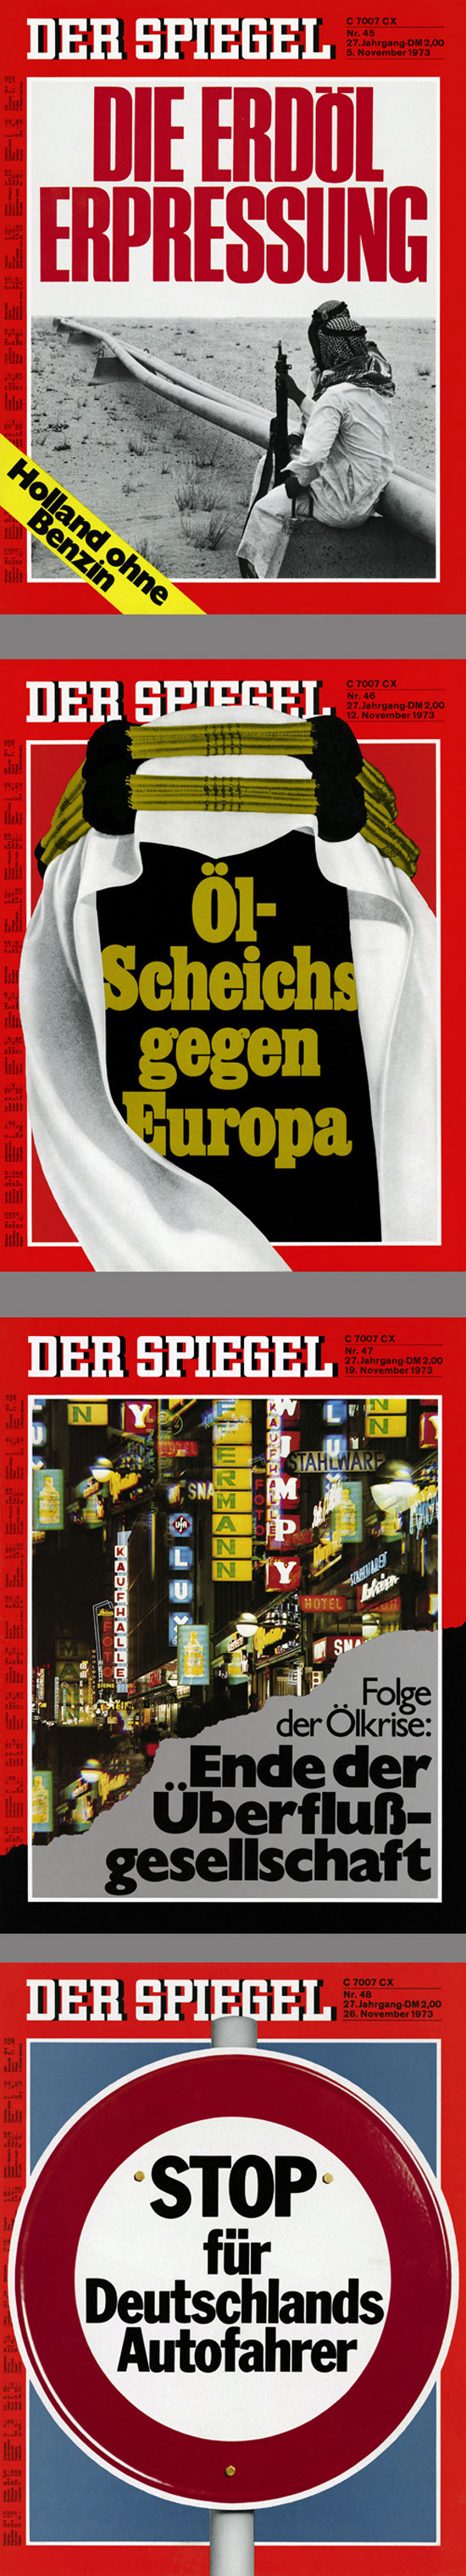 <i>Spiegel</i> Covers on the Oil Crisis (November 1973)